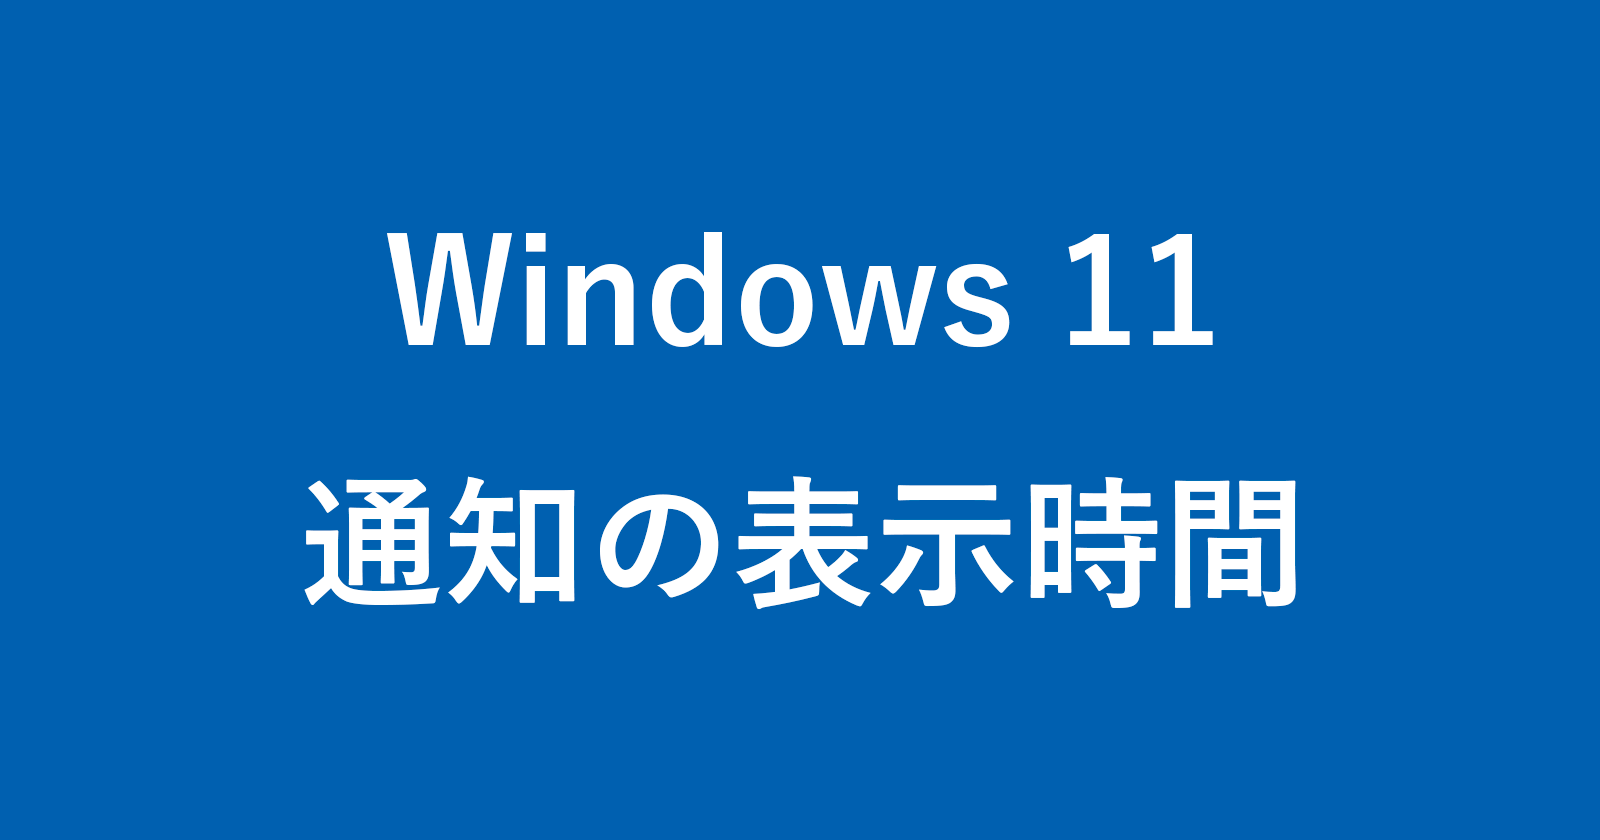 windows 11 how long notification